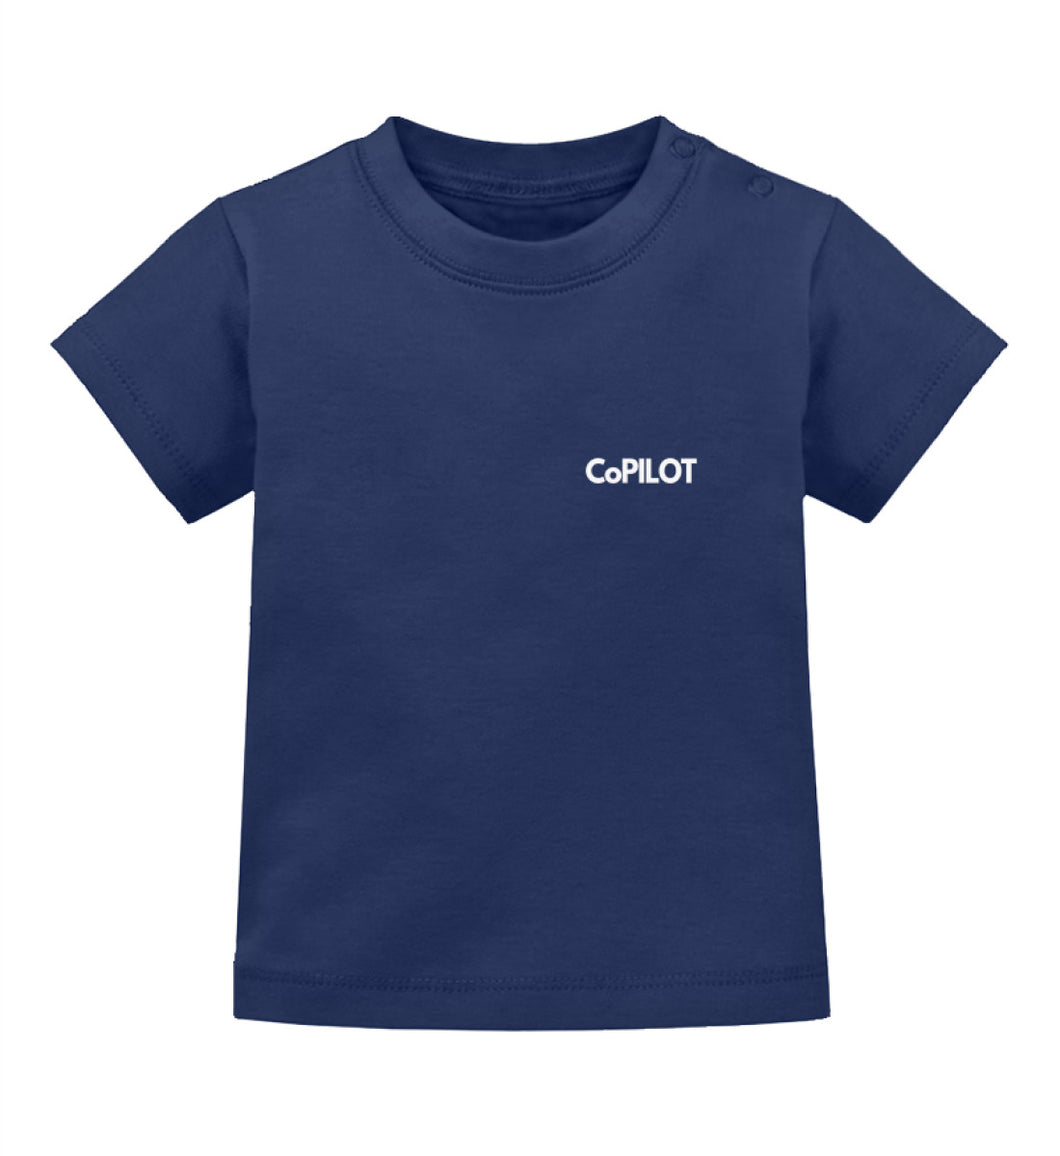 CoPILOT - Baby T-Shirt